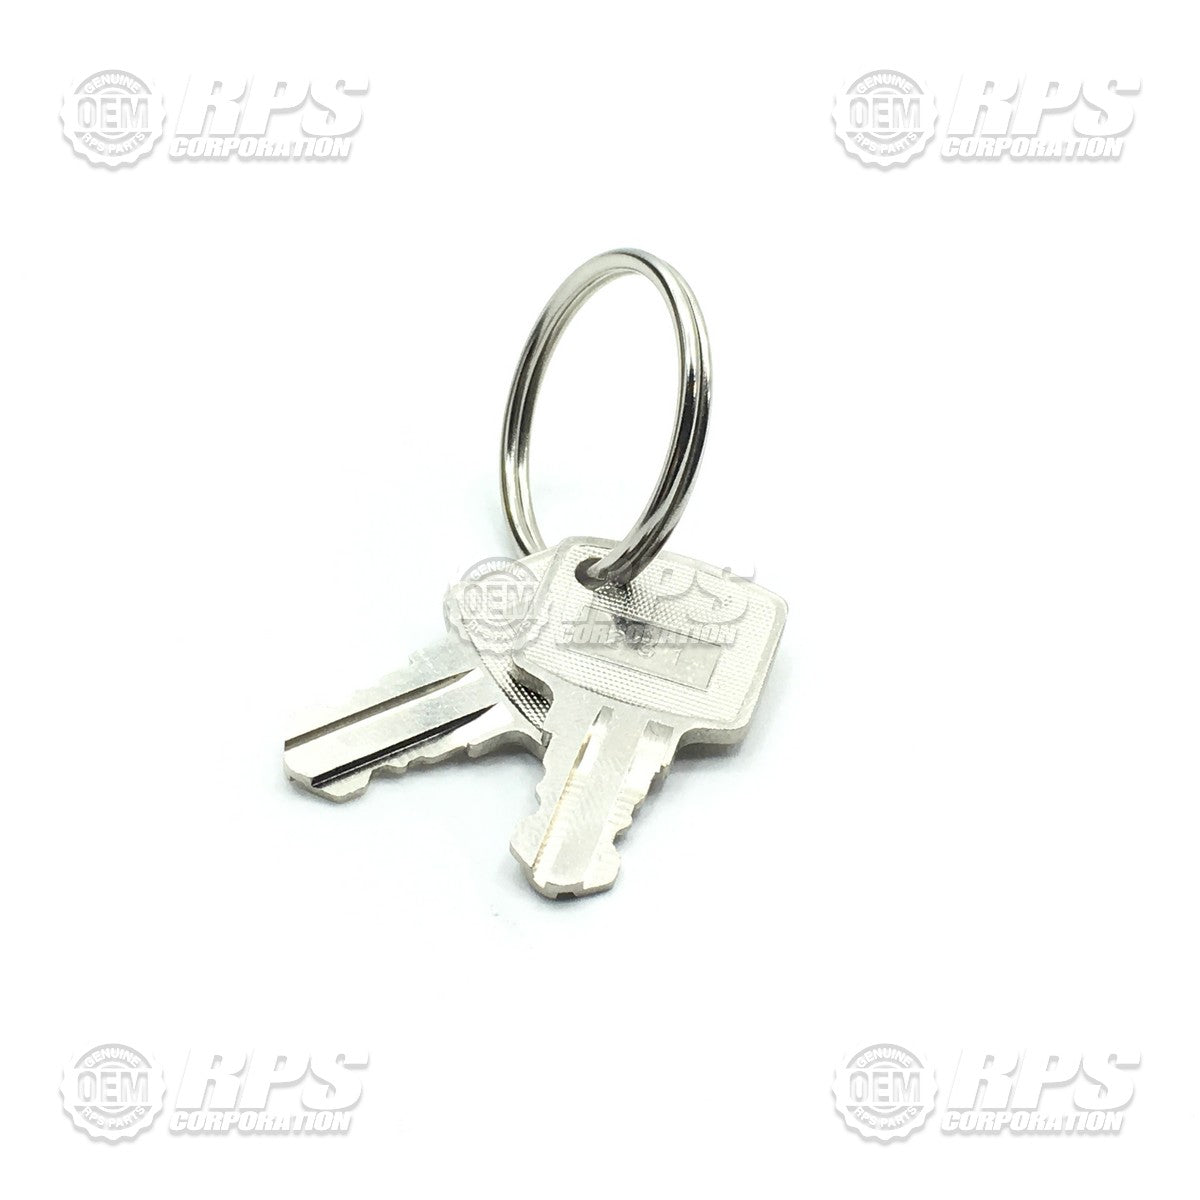 FactoryCat/Tomcat 264-234A, Spare Key Set of 2 Keys